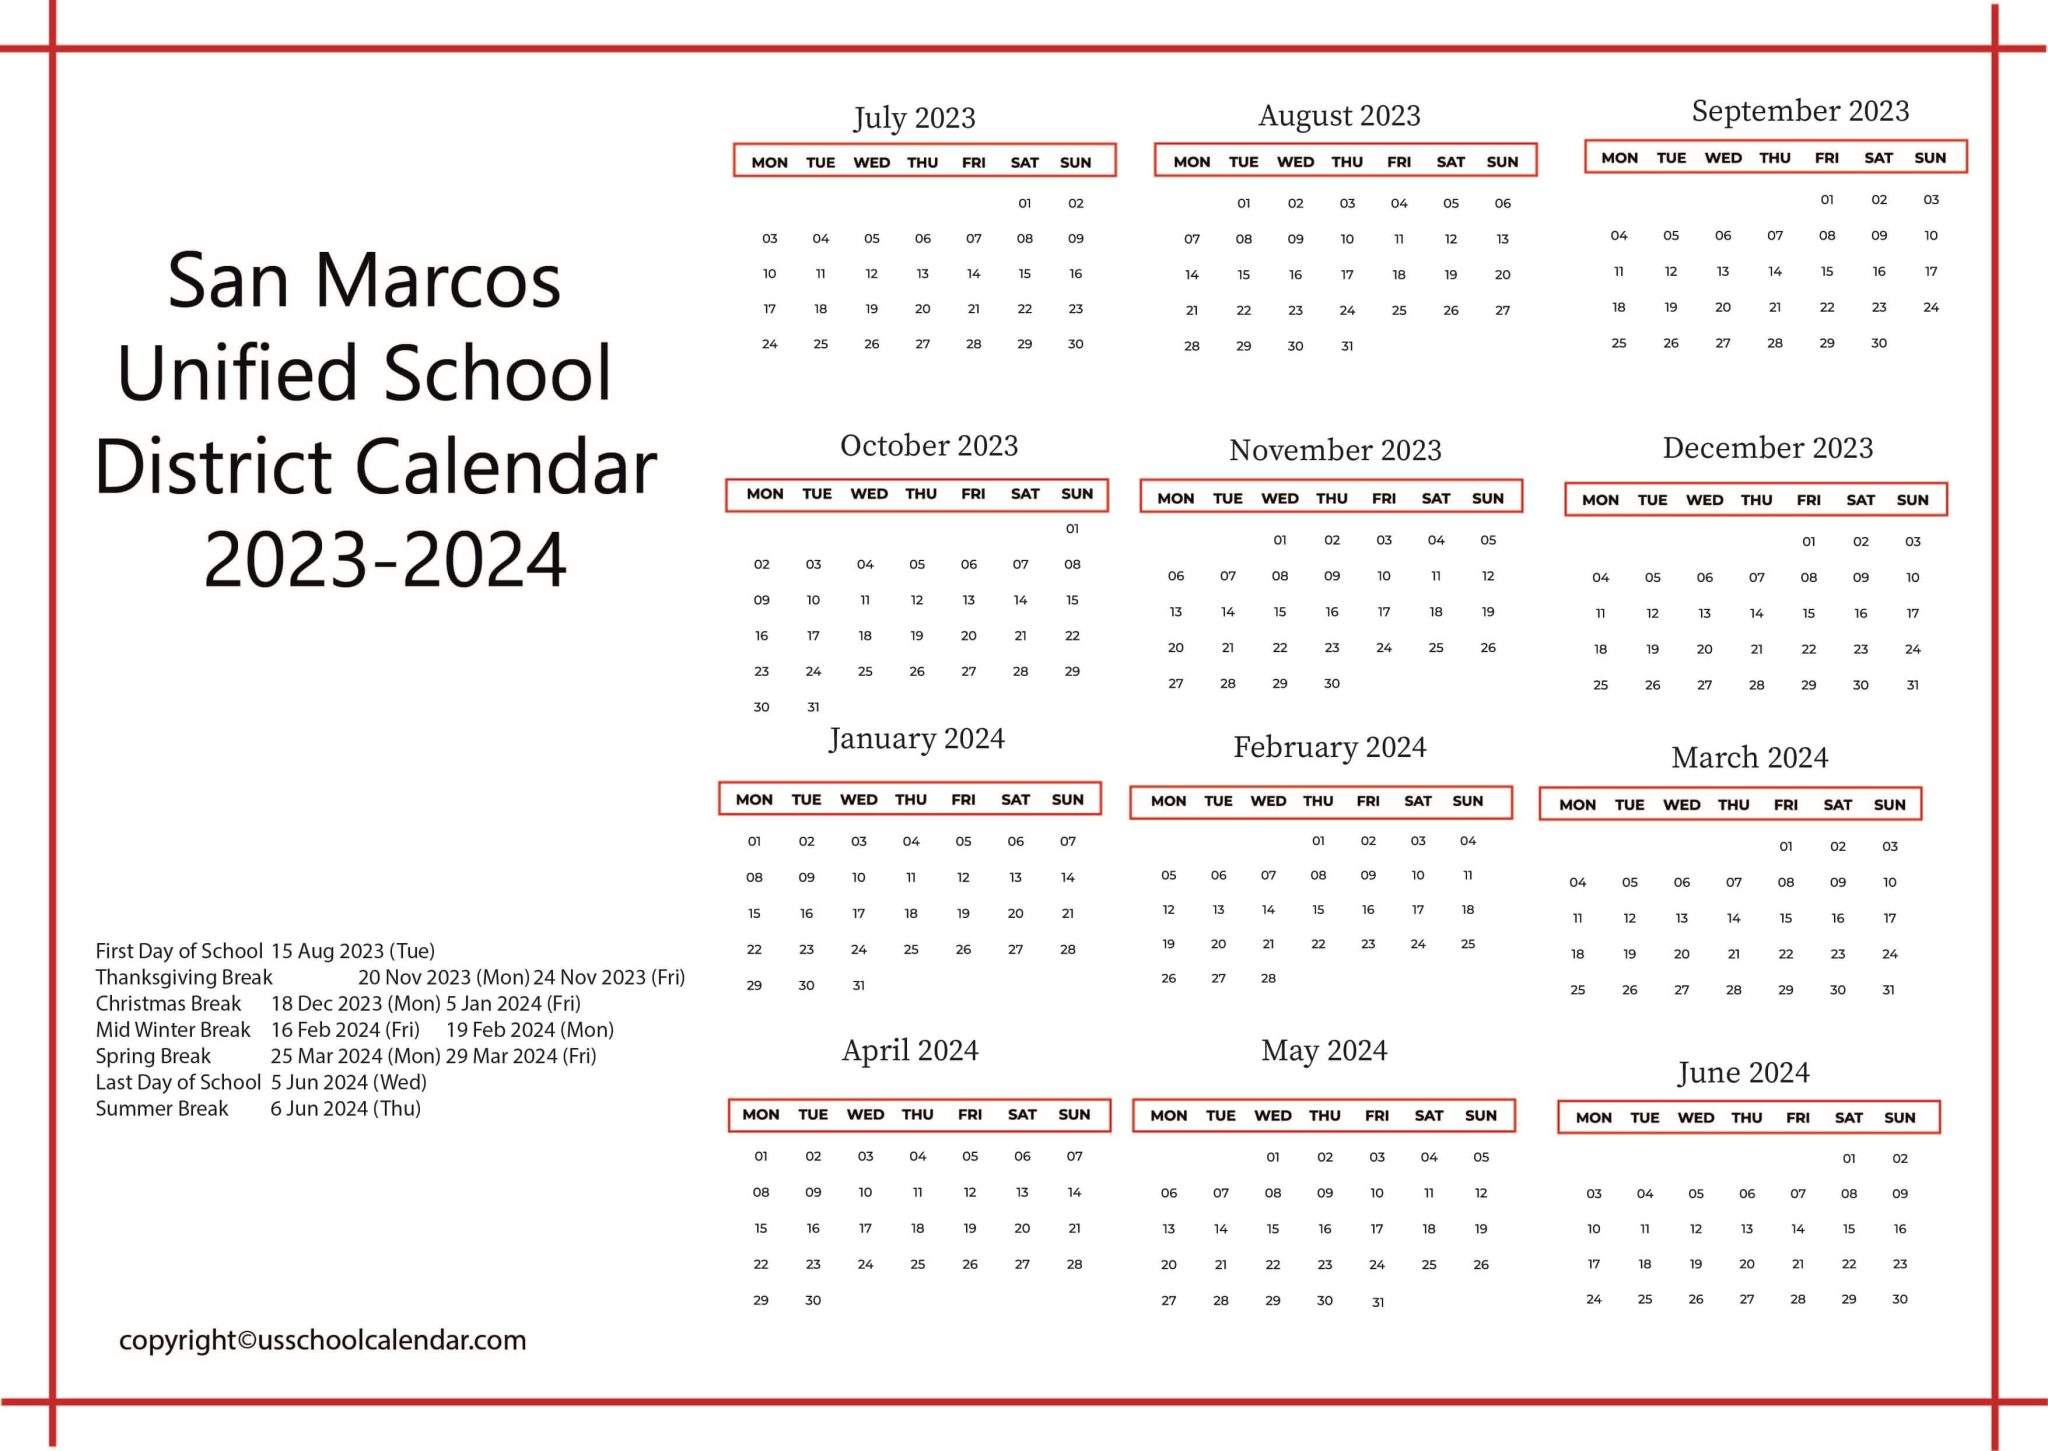 San Marcos Unified School District Calendar 2023 2024